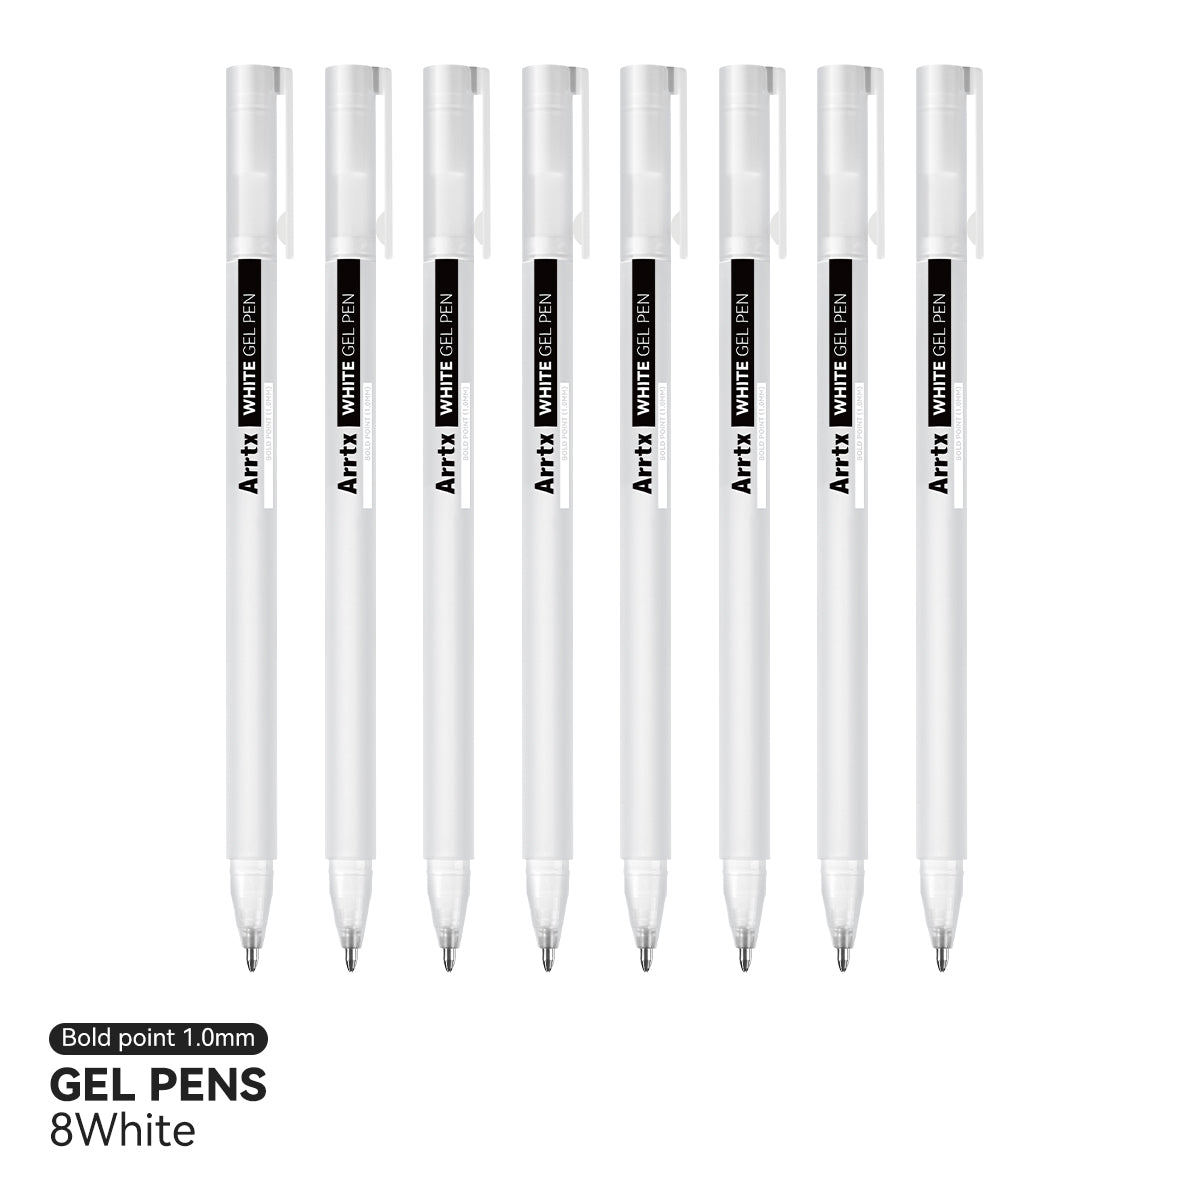 Arrtx Gel Pens White Color 8 Pack Large Capacity White Ink Pens